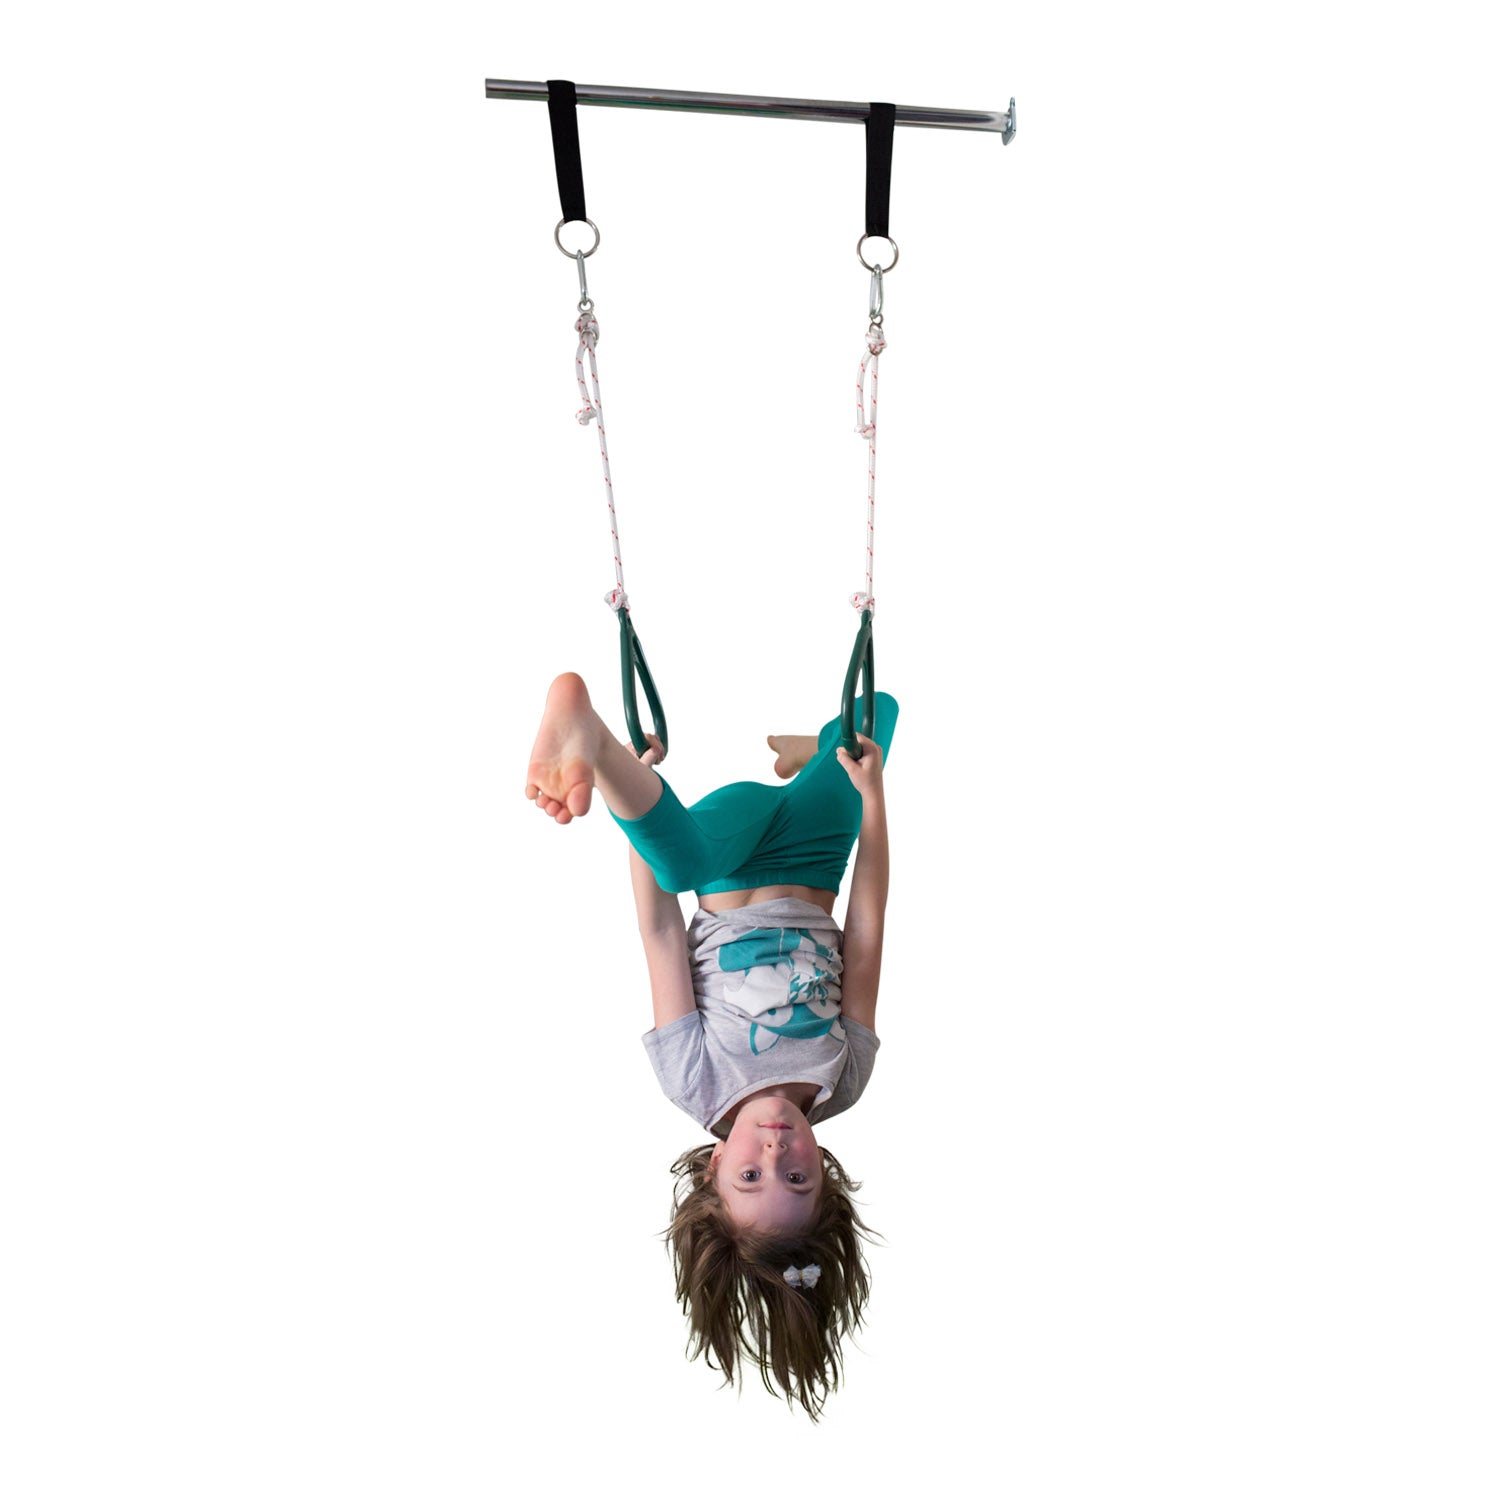 Gymnastics Rings for Kids - Green - DreamGYM